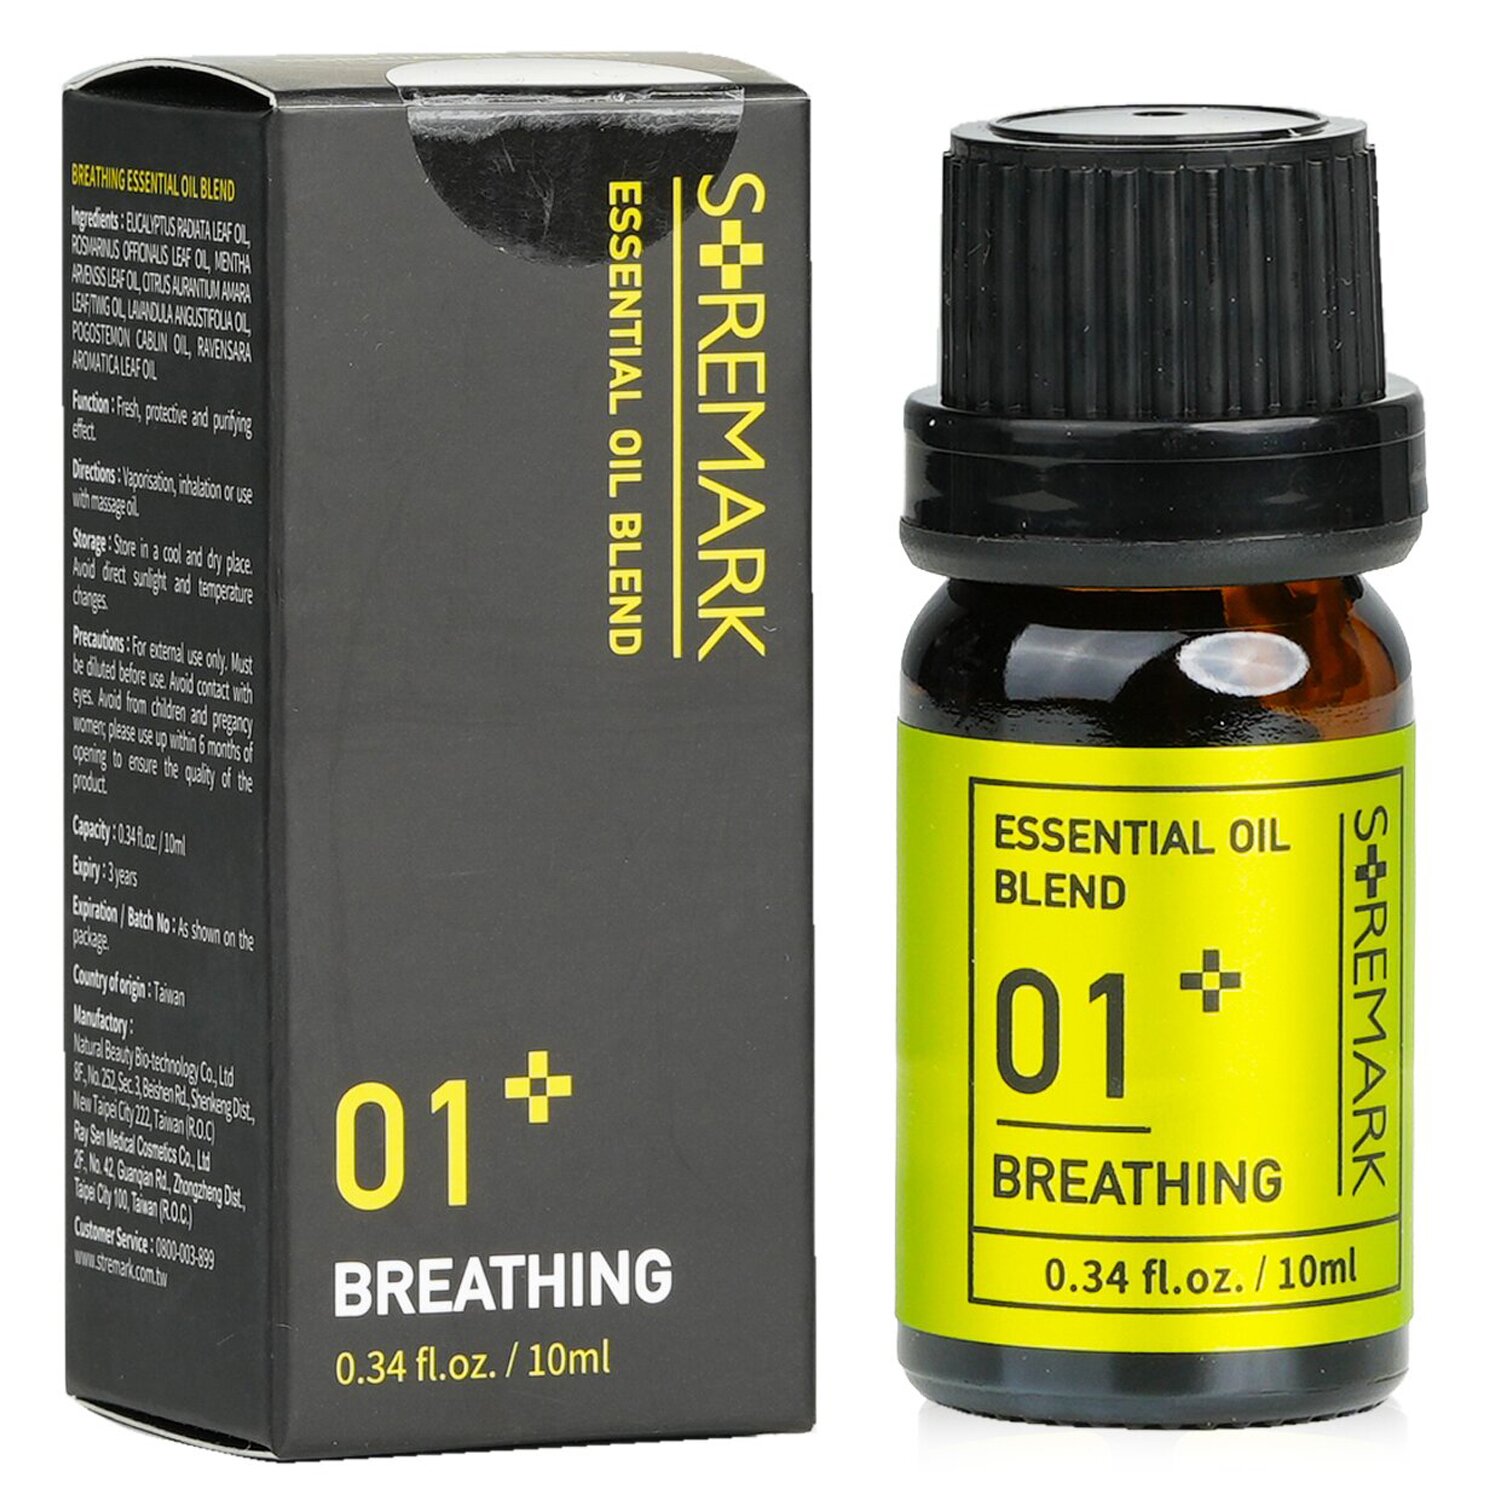 Natural Beauty Stremark Essential Oil Blend 01- Breathing 10ml/0.34oz